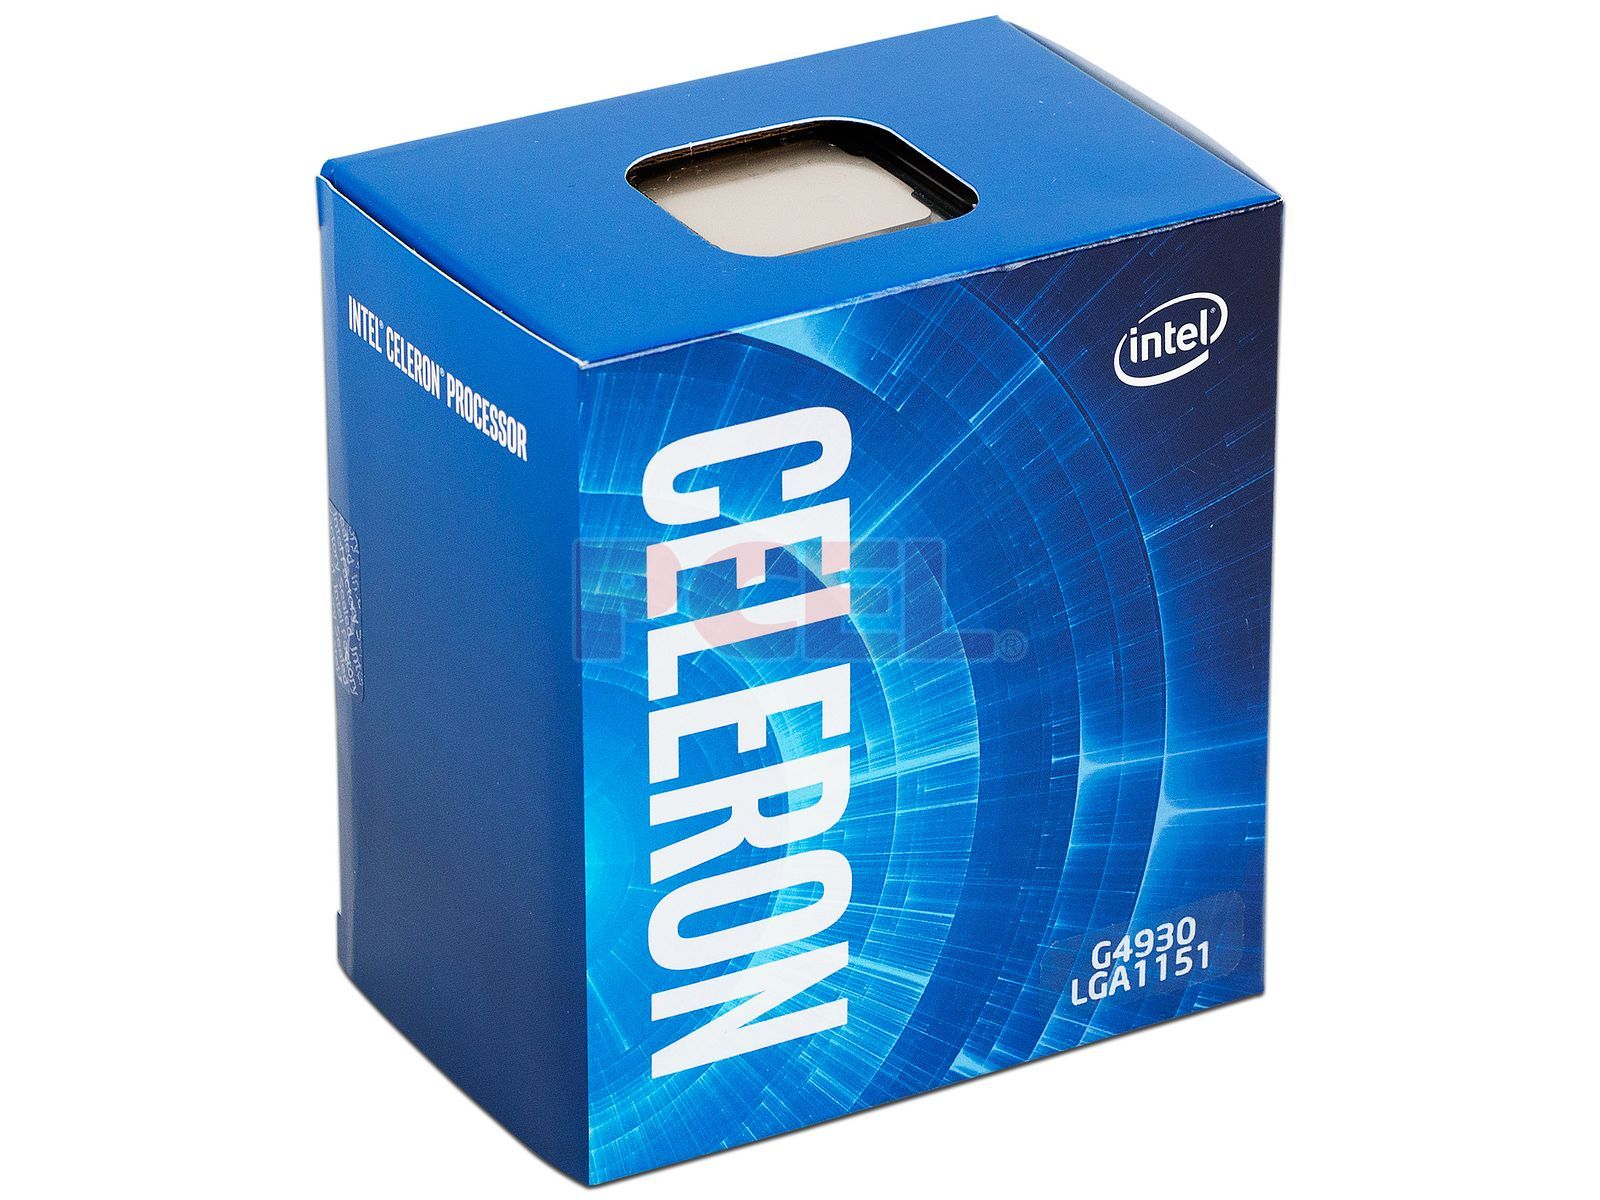 Intel Celeron G4930 3.2 GHz   MB LGA 1151   BX80684G4930　並行輸入品